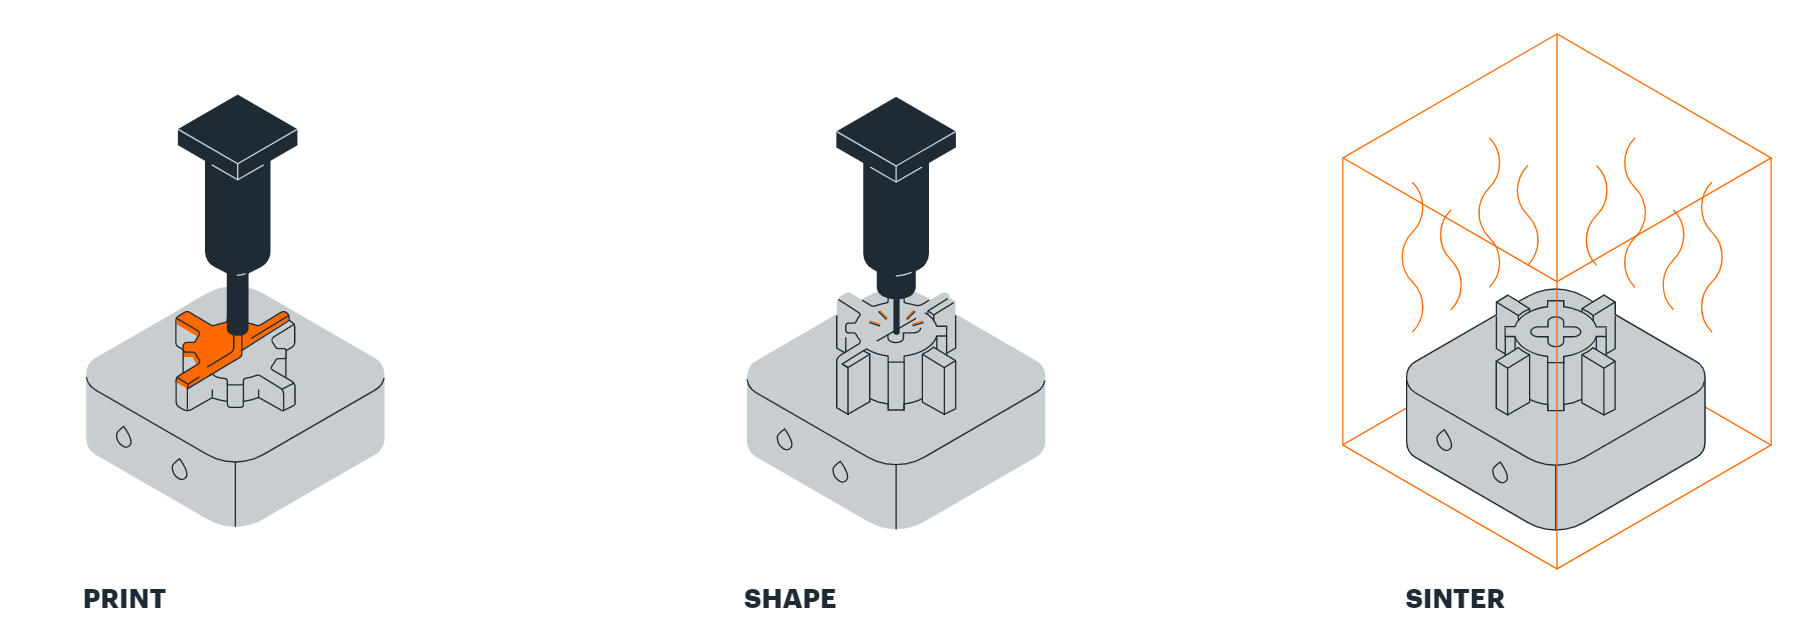 The TrueShape 3D printing process. Image via Mantle.